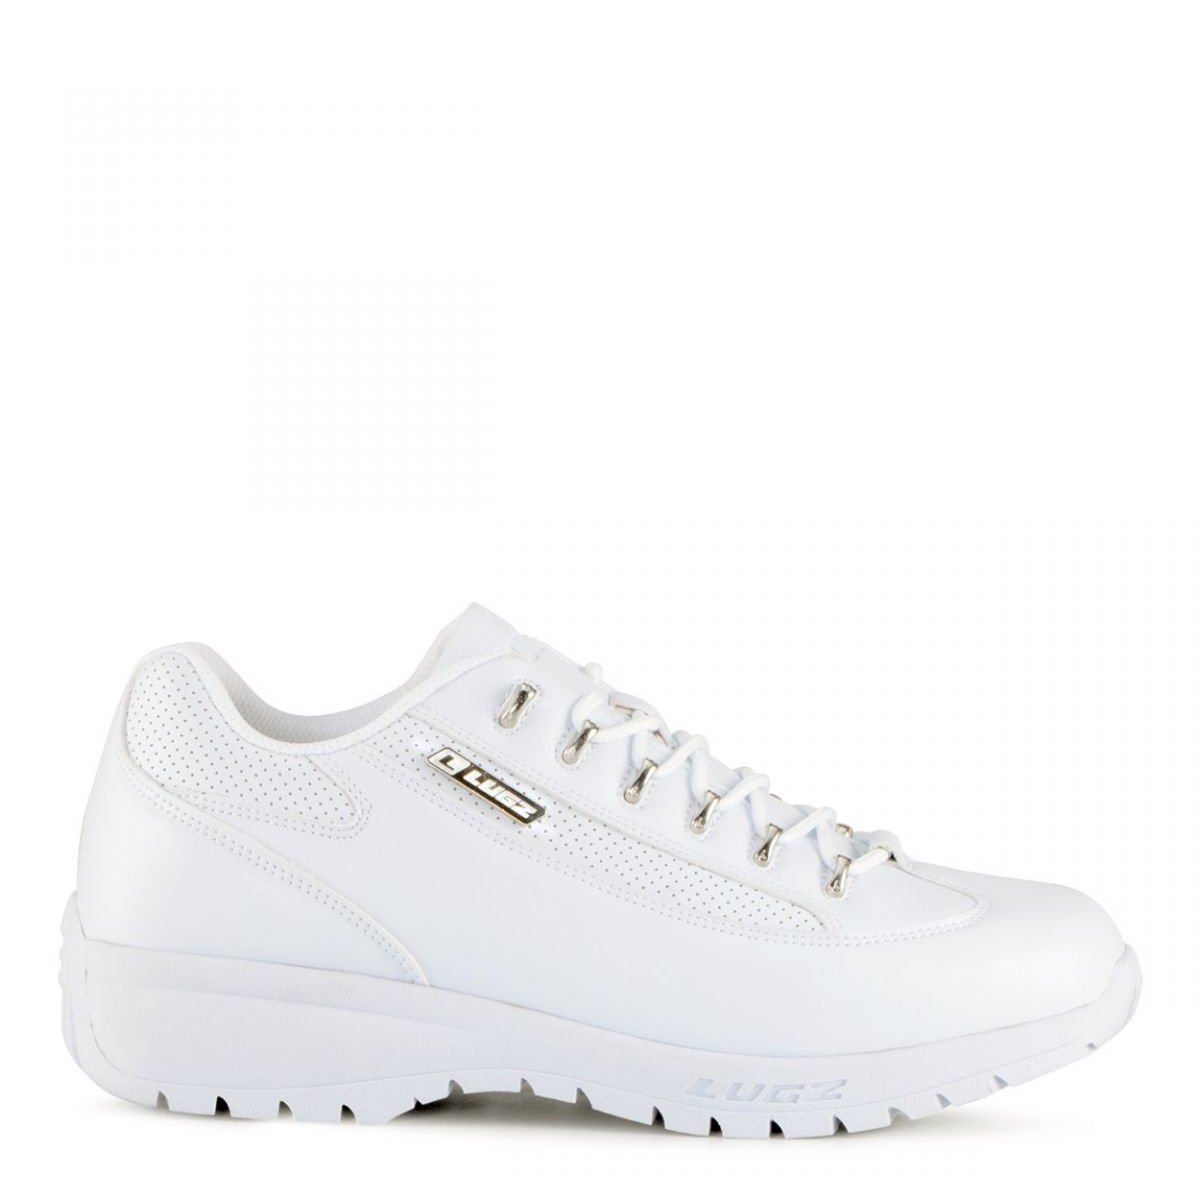 Lugz Men's Express Sneaker White - MEXPRSPV-100 WHITE - WHITE, 13